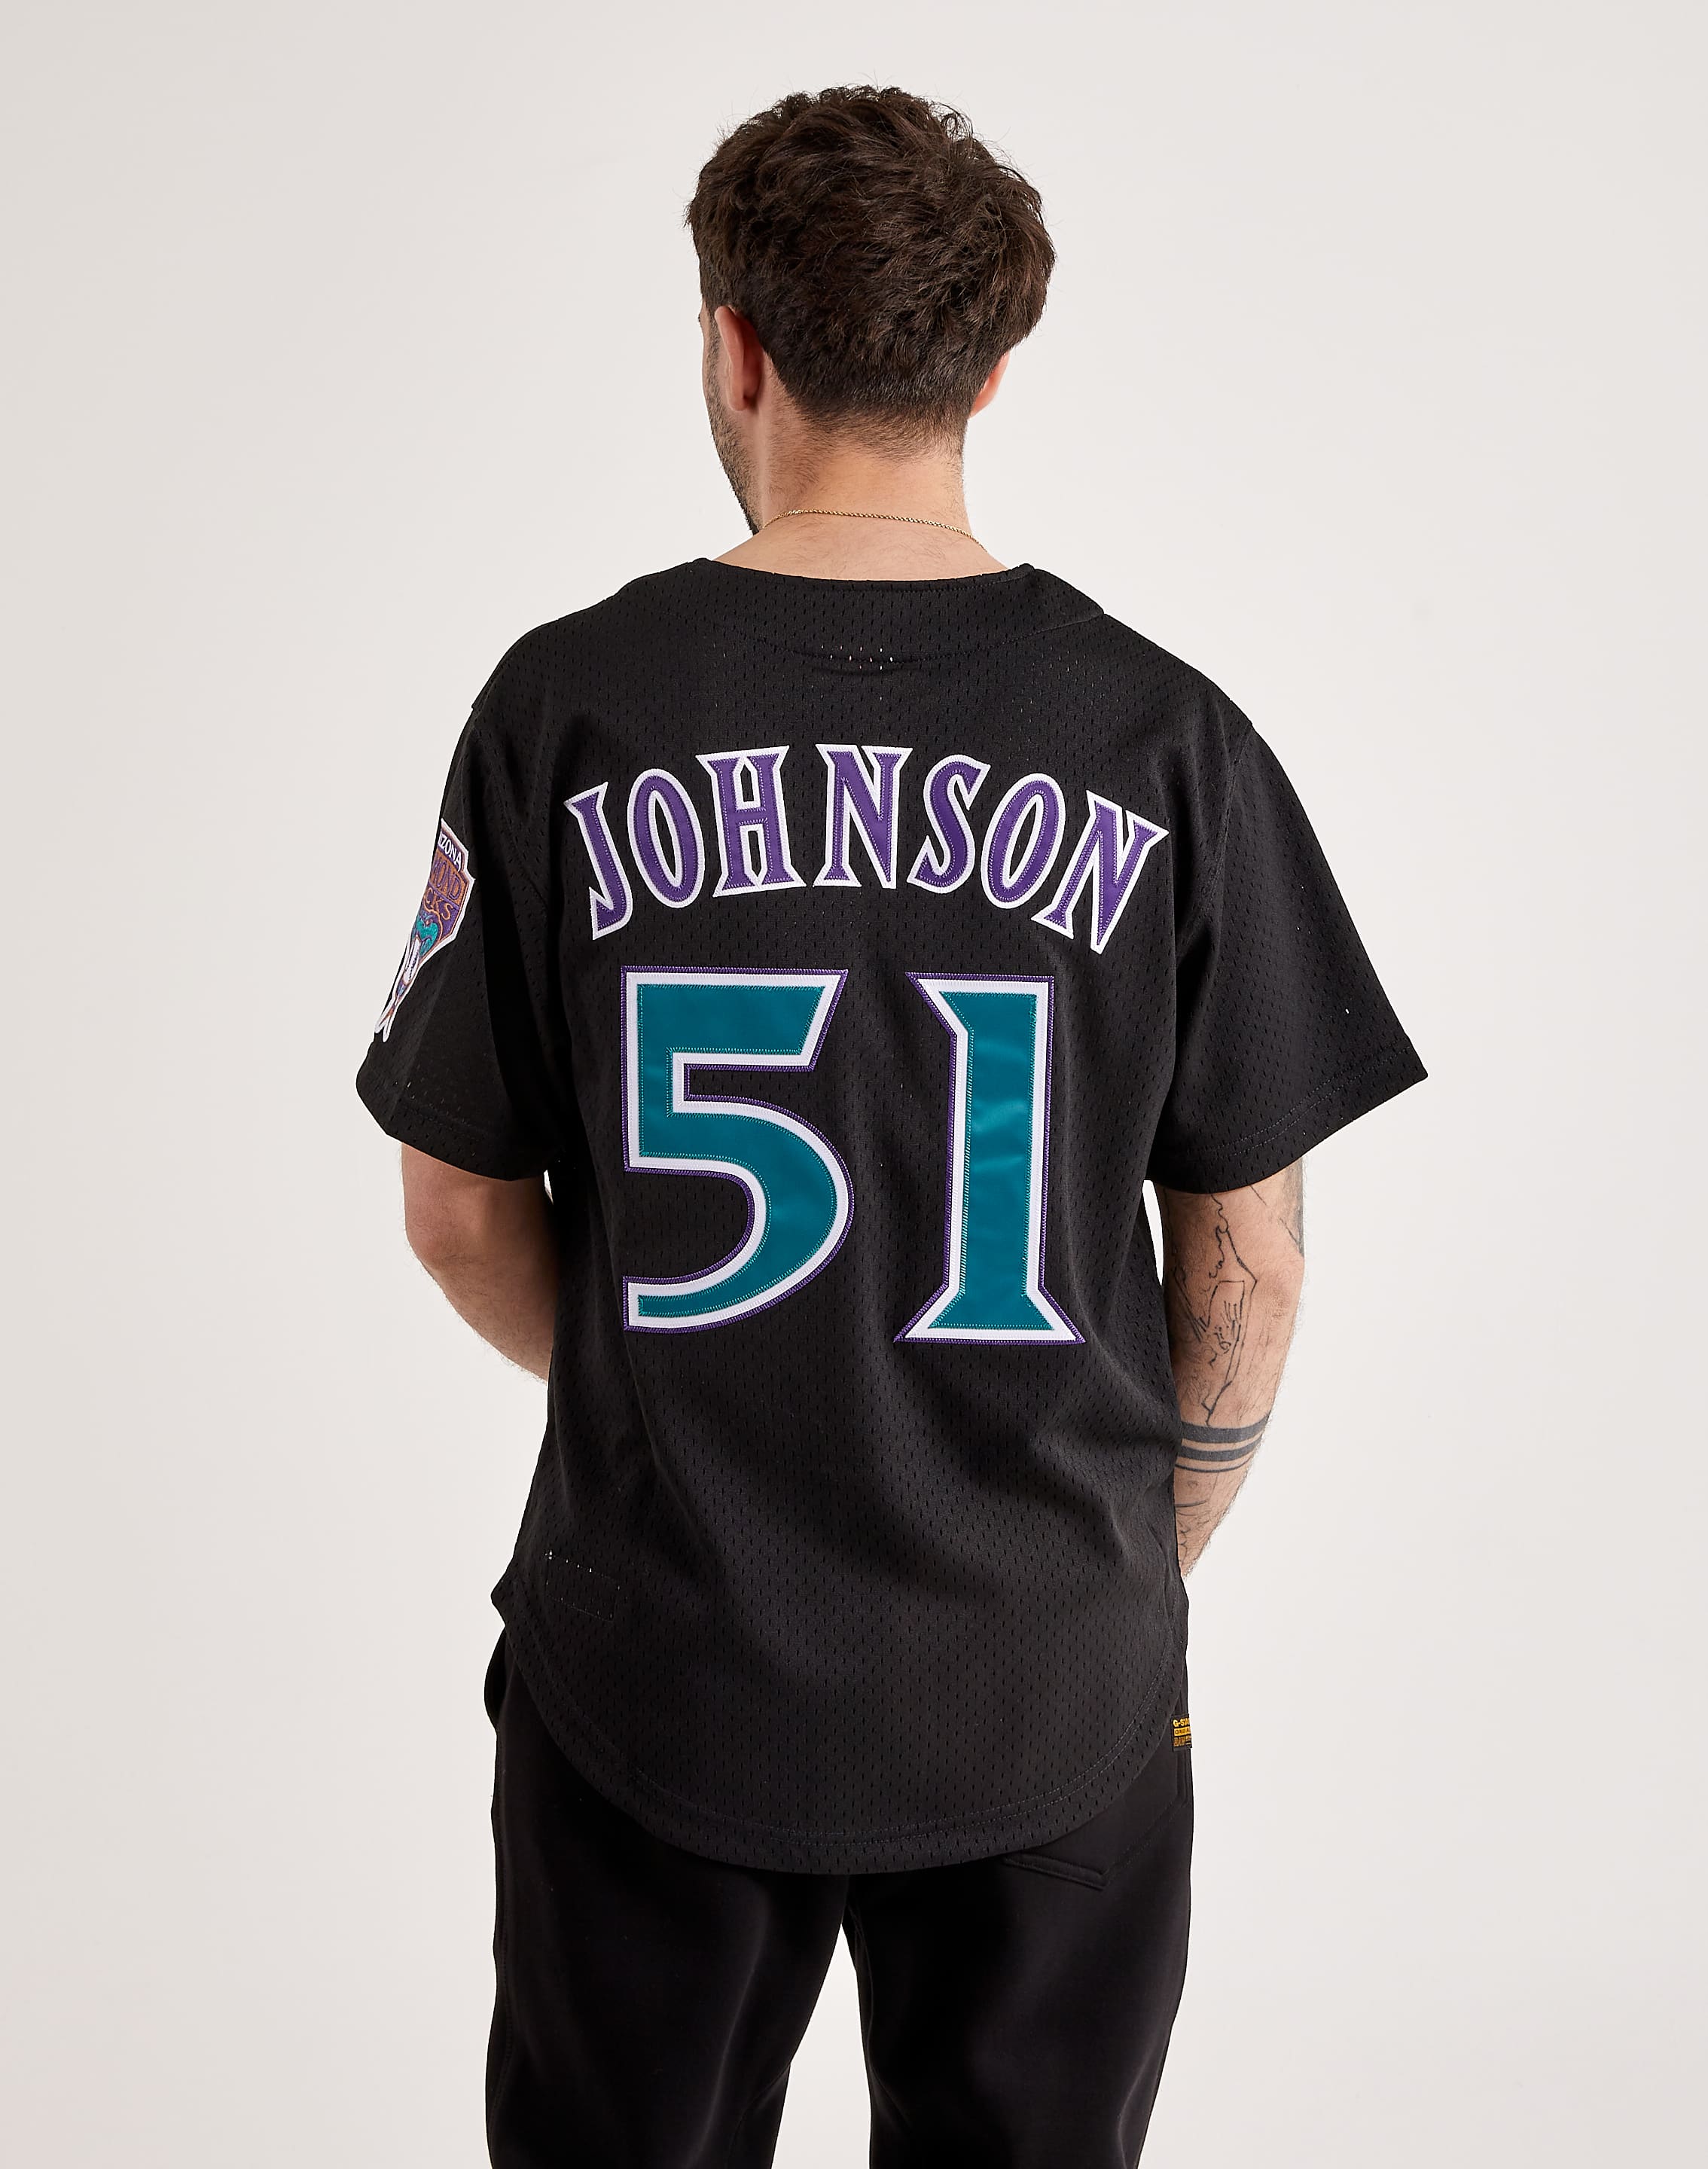 randy johnson jersey for sale